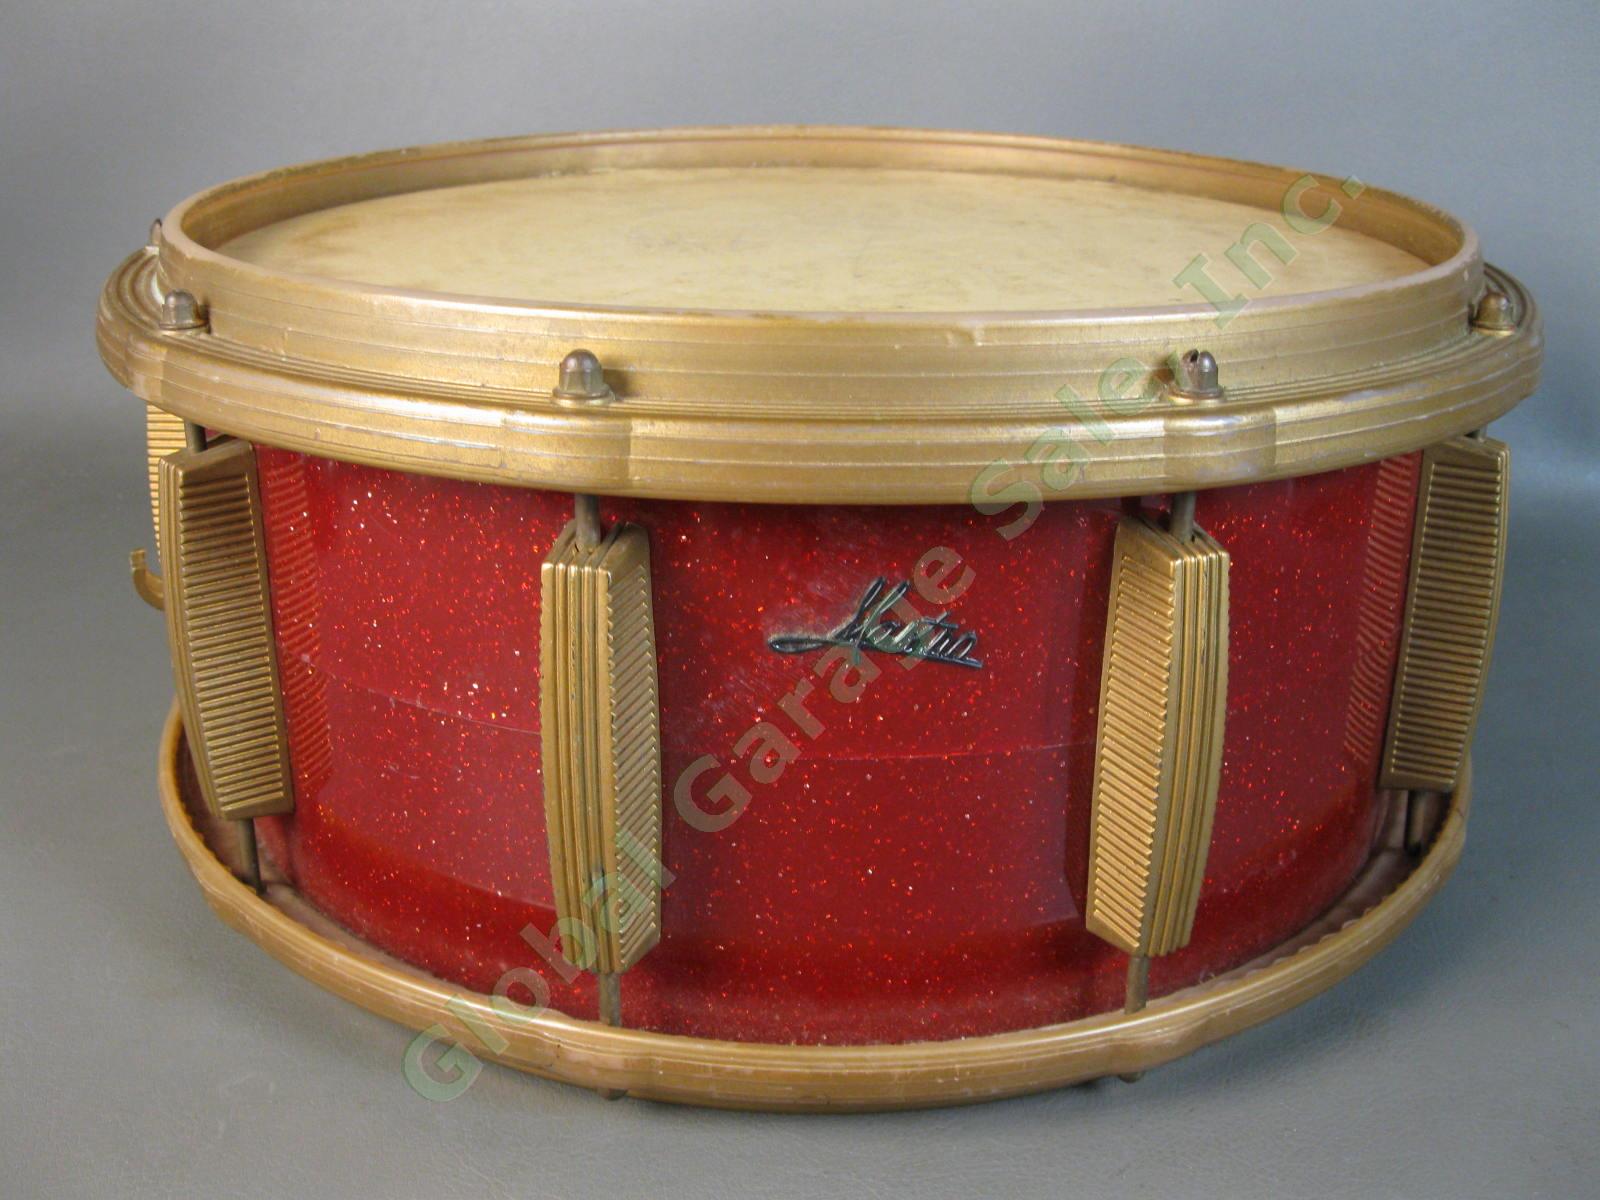 1960s VINTAGE Mastro Red Sparkle 14" Plastic Snare Drum Excellent Condition NR 3